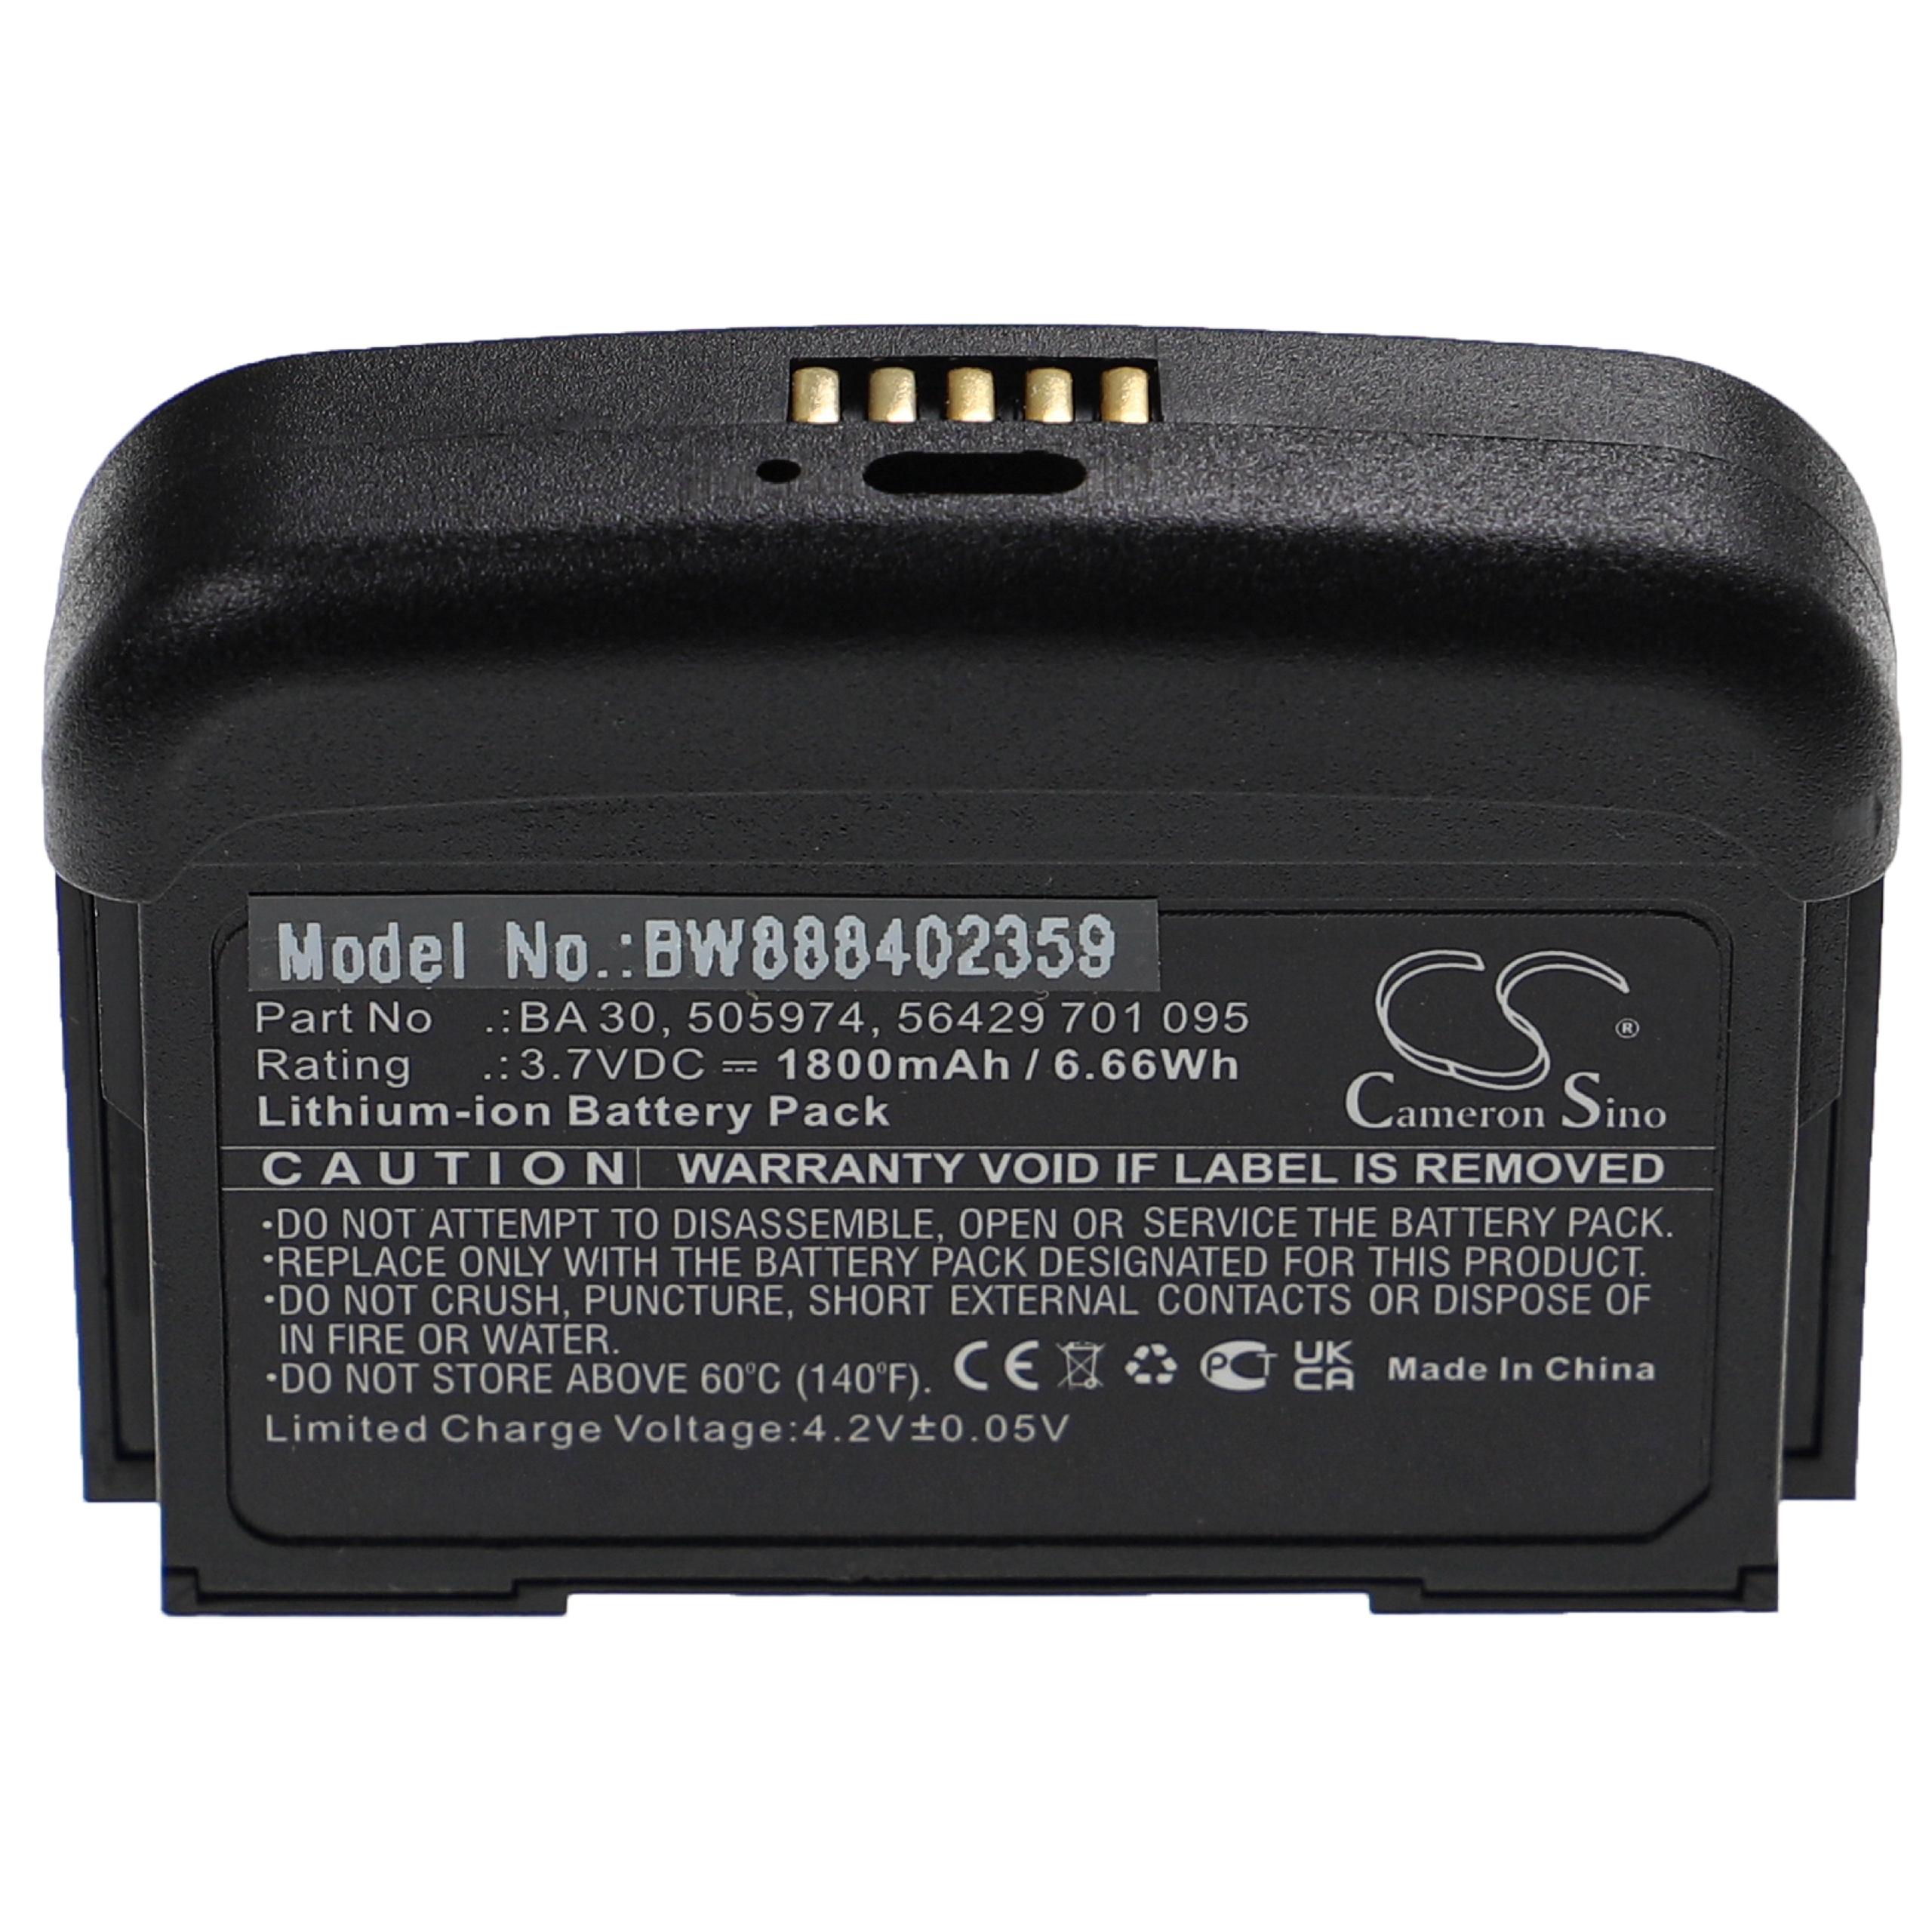 Wireless System Battery Replacement for Sennheiser 505974, 56429 701 095, BA 30 - 1800mAh 3.7V Li-Ion